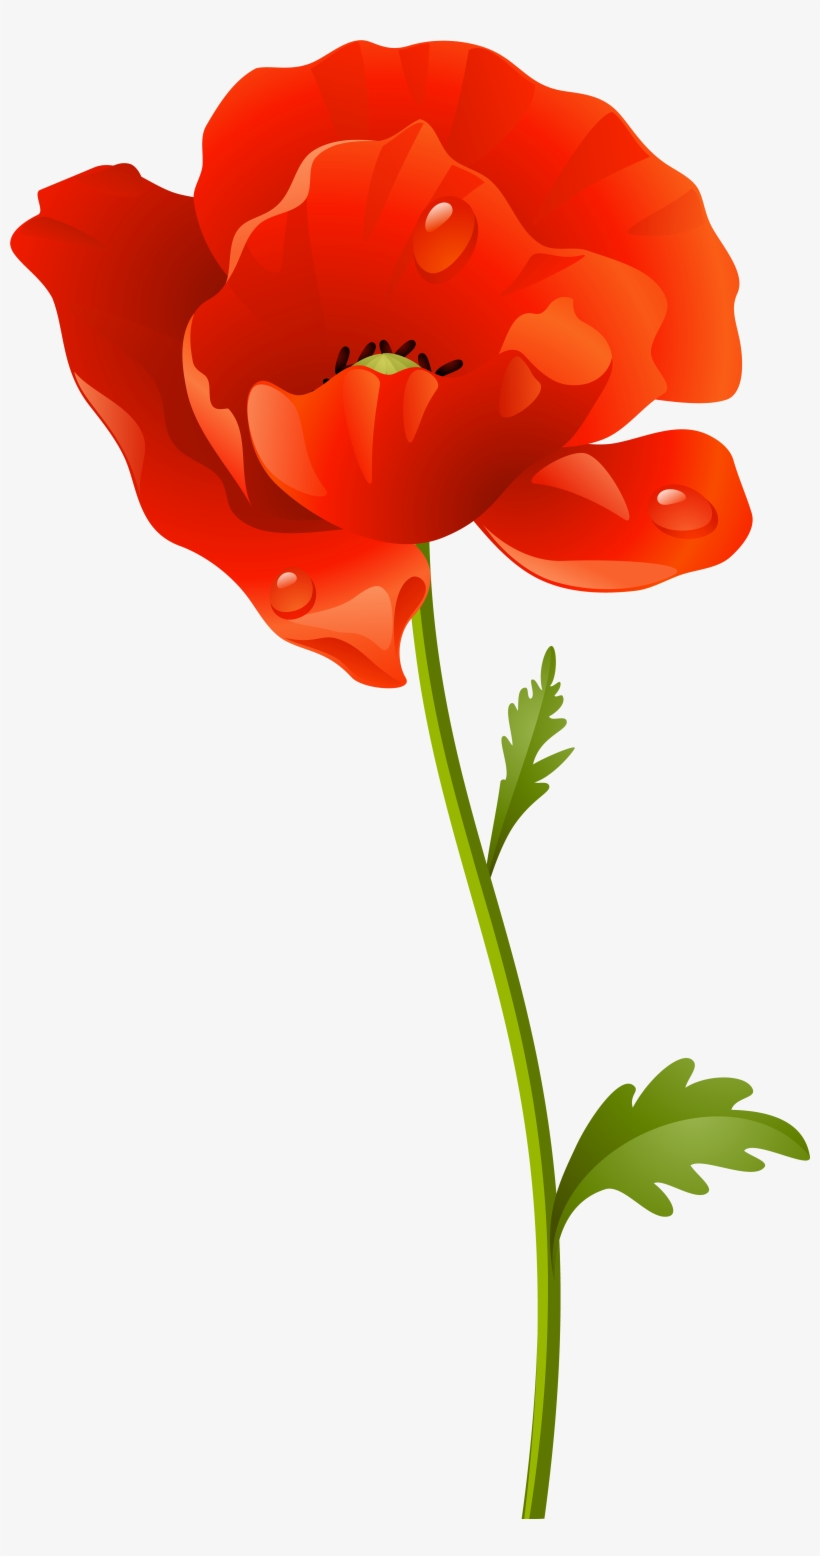 Red Poppy Flower Png Clip Art Image - Clip Art, transparent png #776201